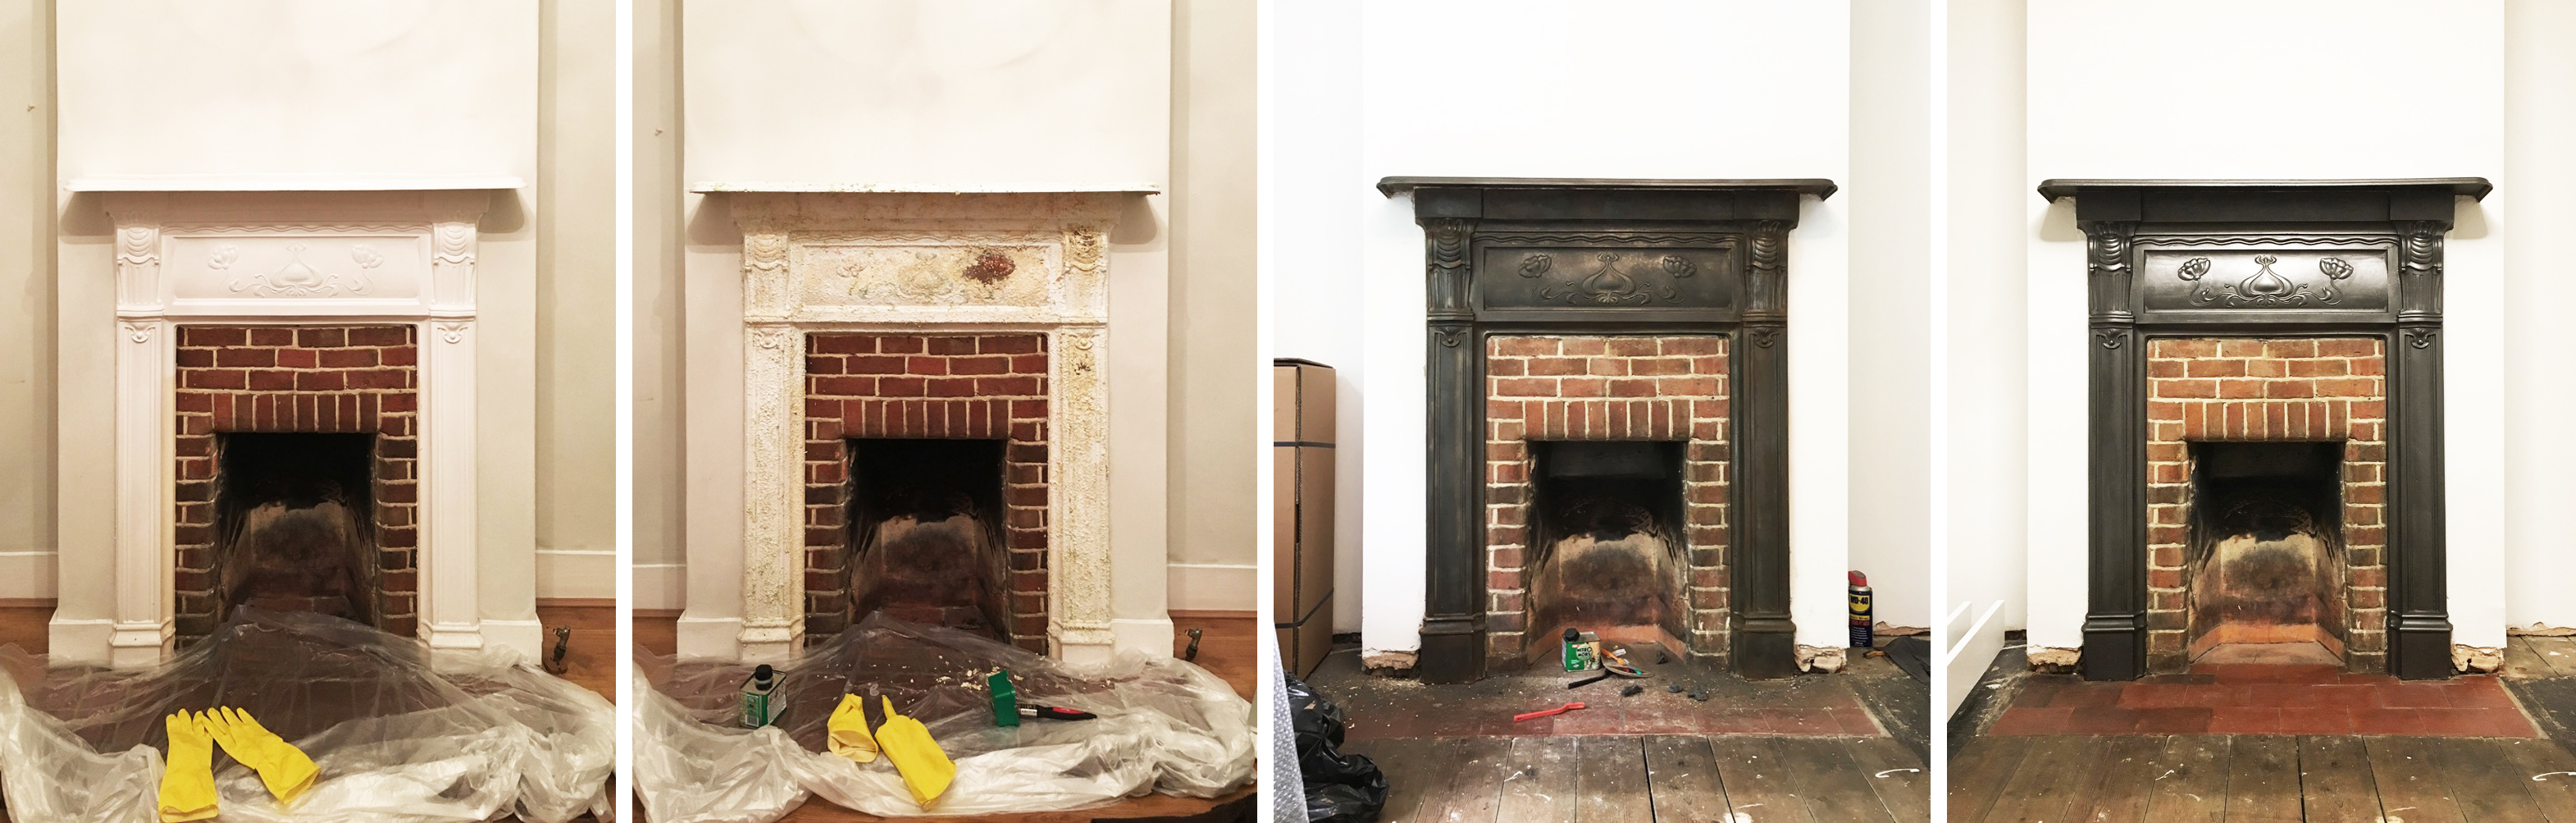 3_fireplace sequence.jpg